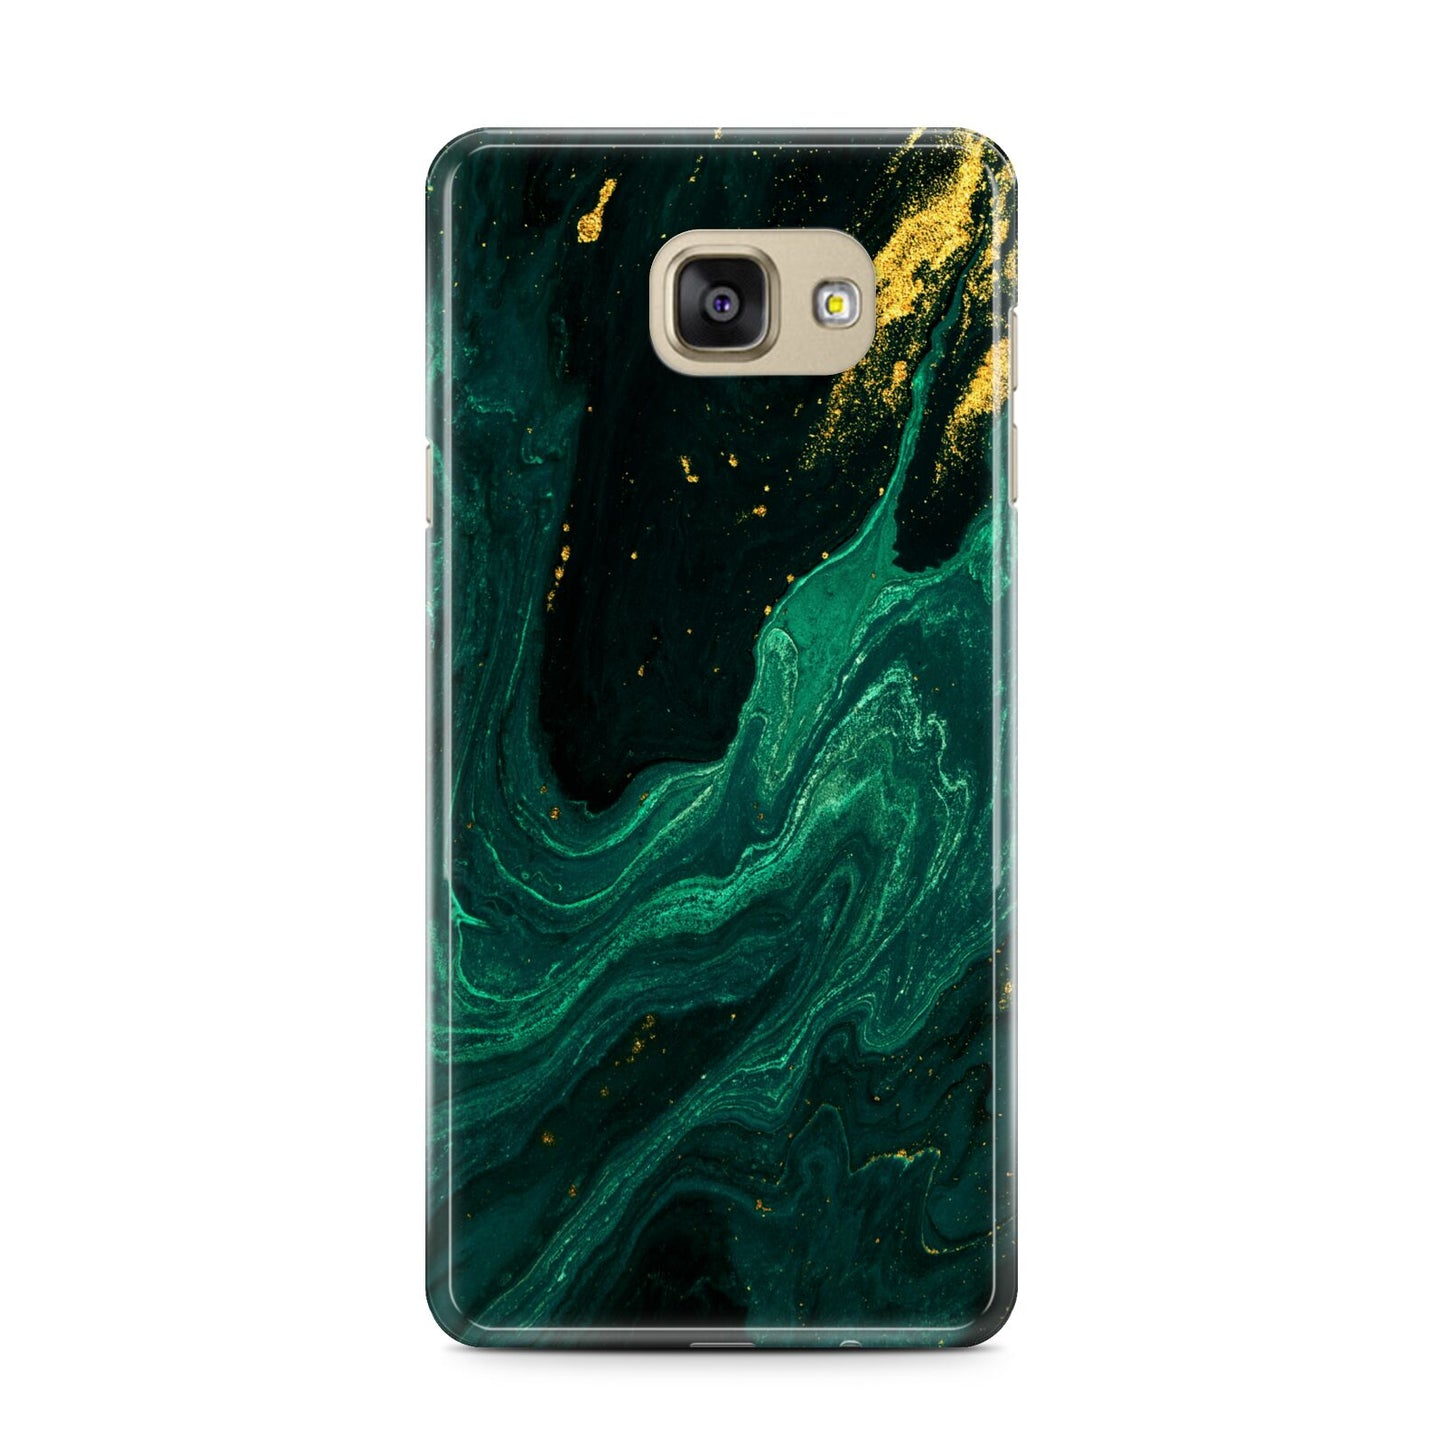 Emerald Green Samsung Galaxy A7 2016 Case on gold phone